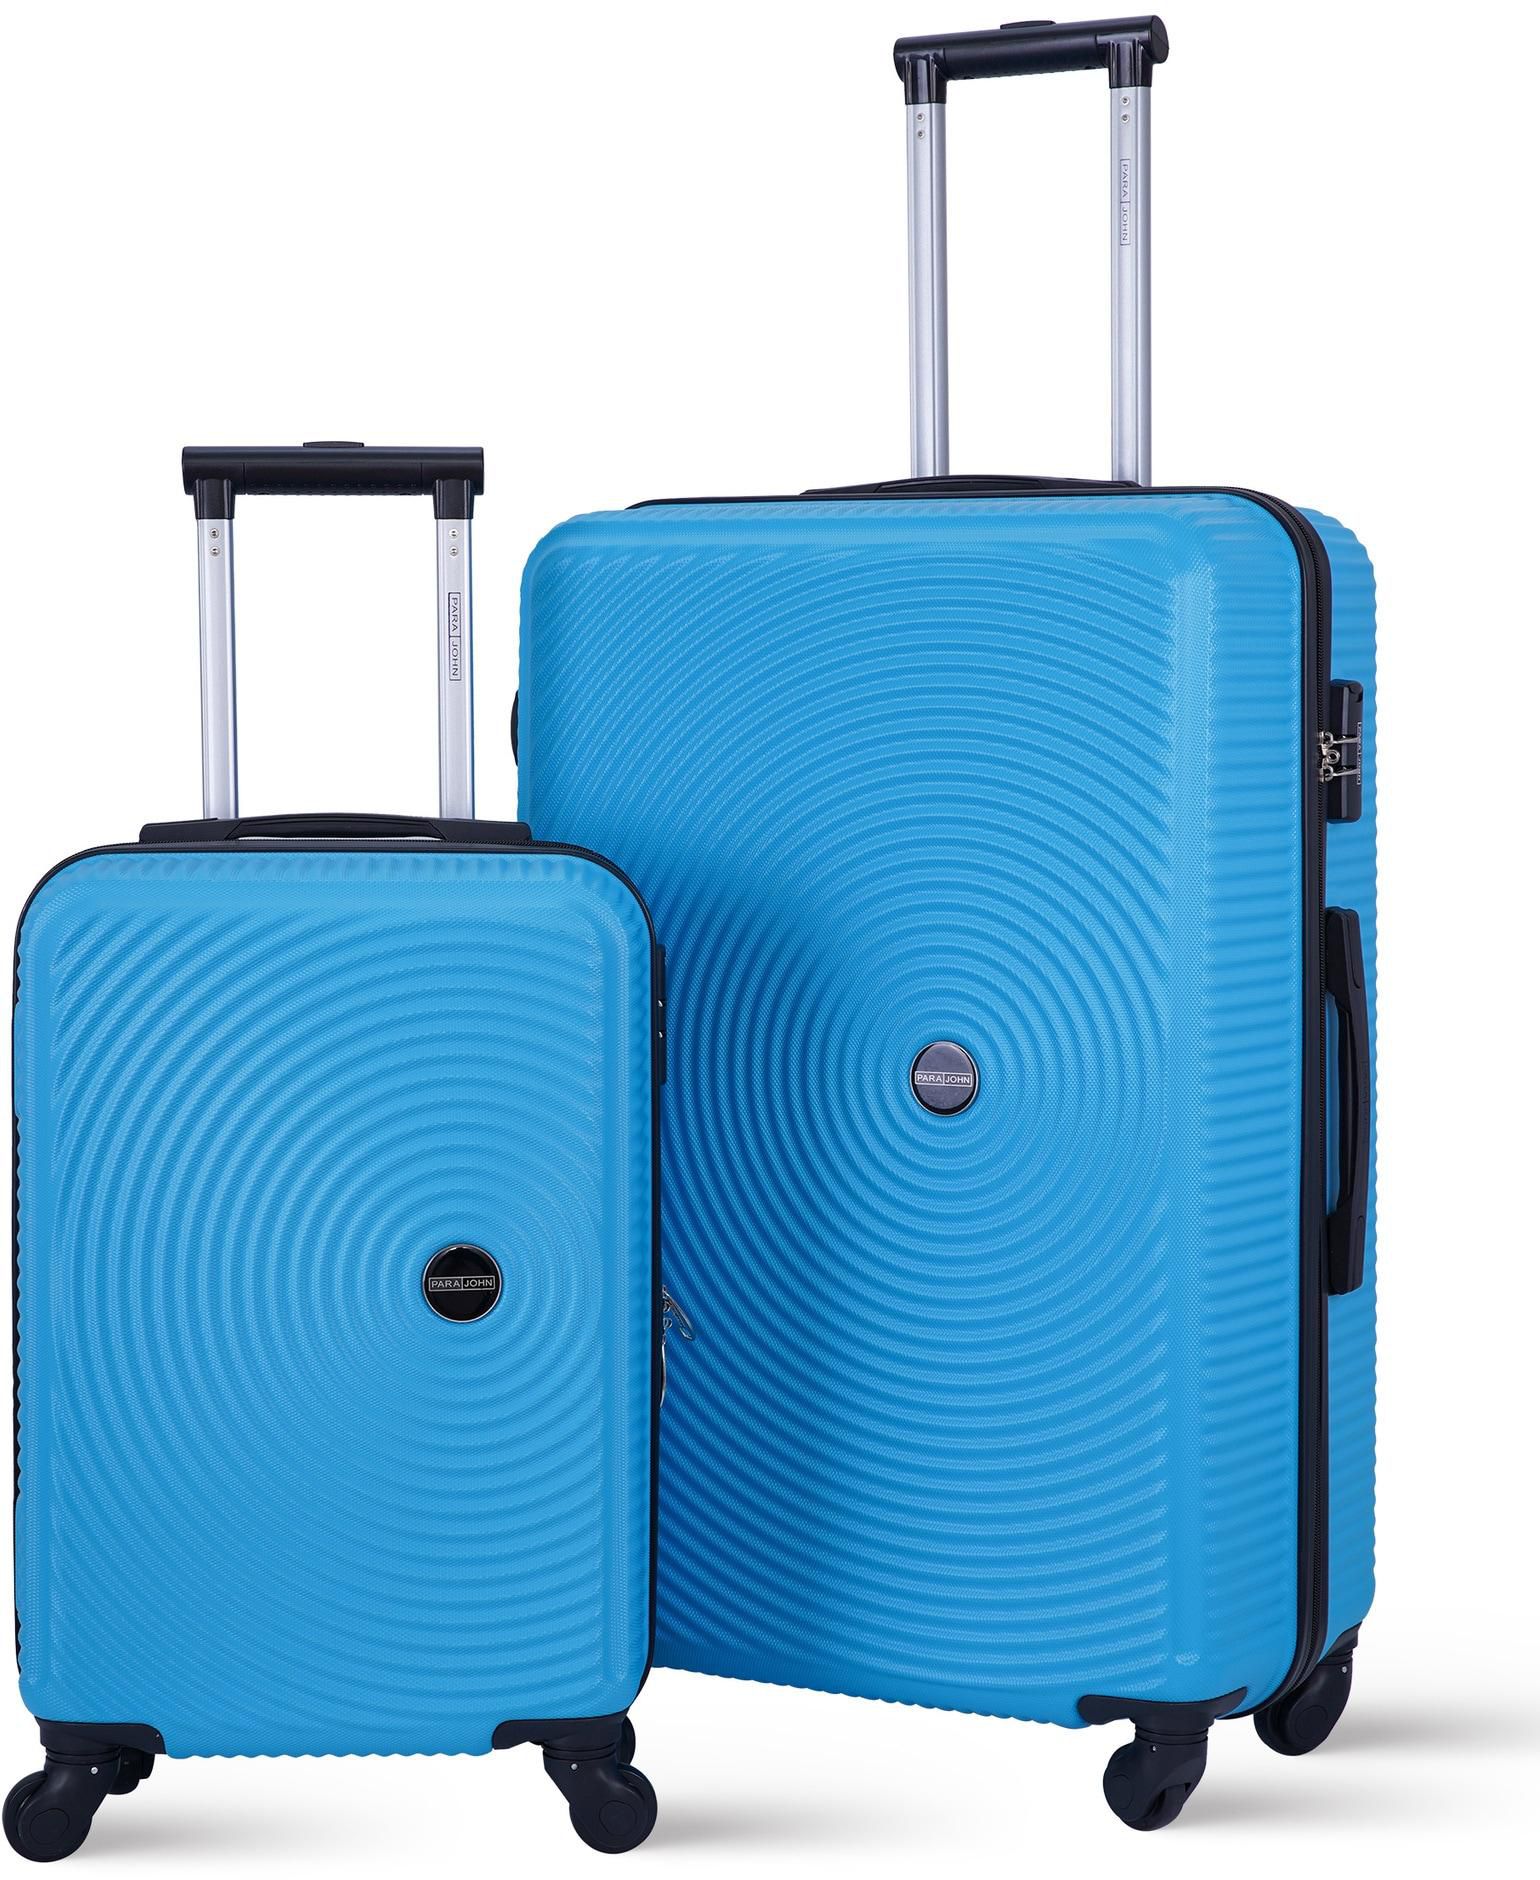 PARA JOHN2-Pieces Hardside Travel Trolley Luggage Set BLUE 20/28